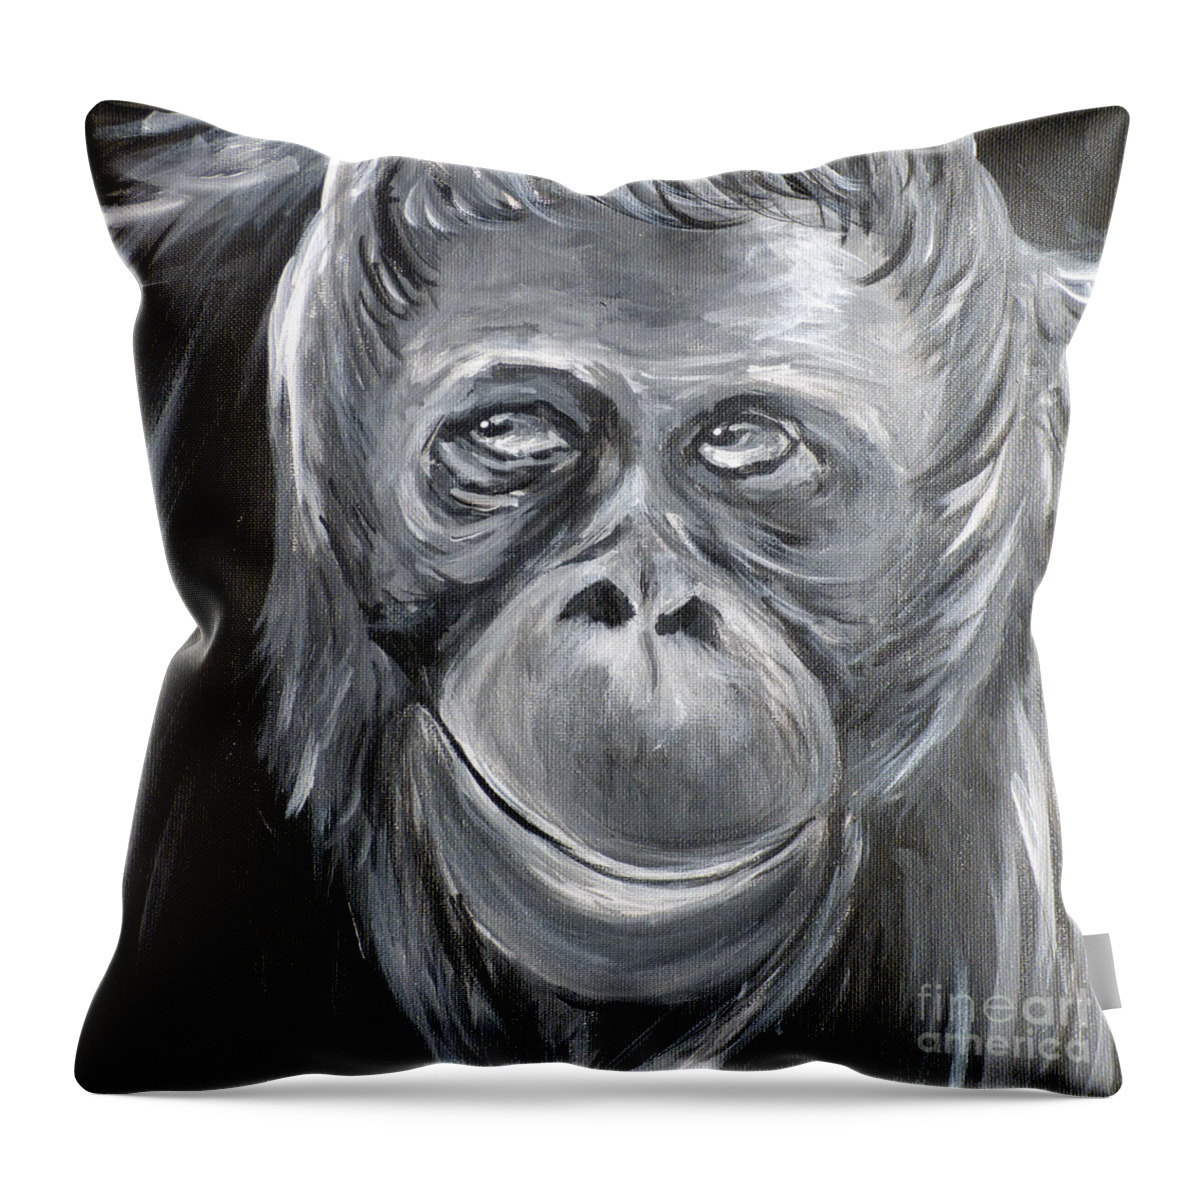 Orangutan Throw Pillow featuring the painting You Talkin' to Me? by Deborah Smith